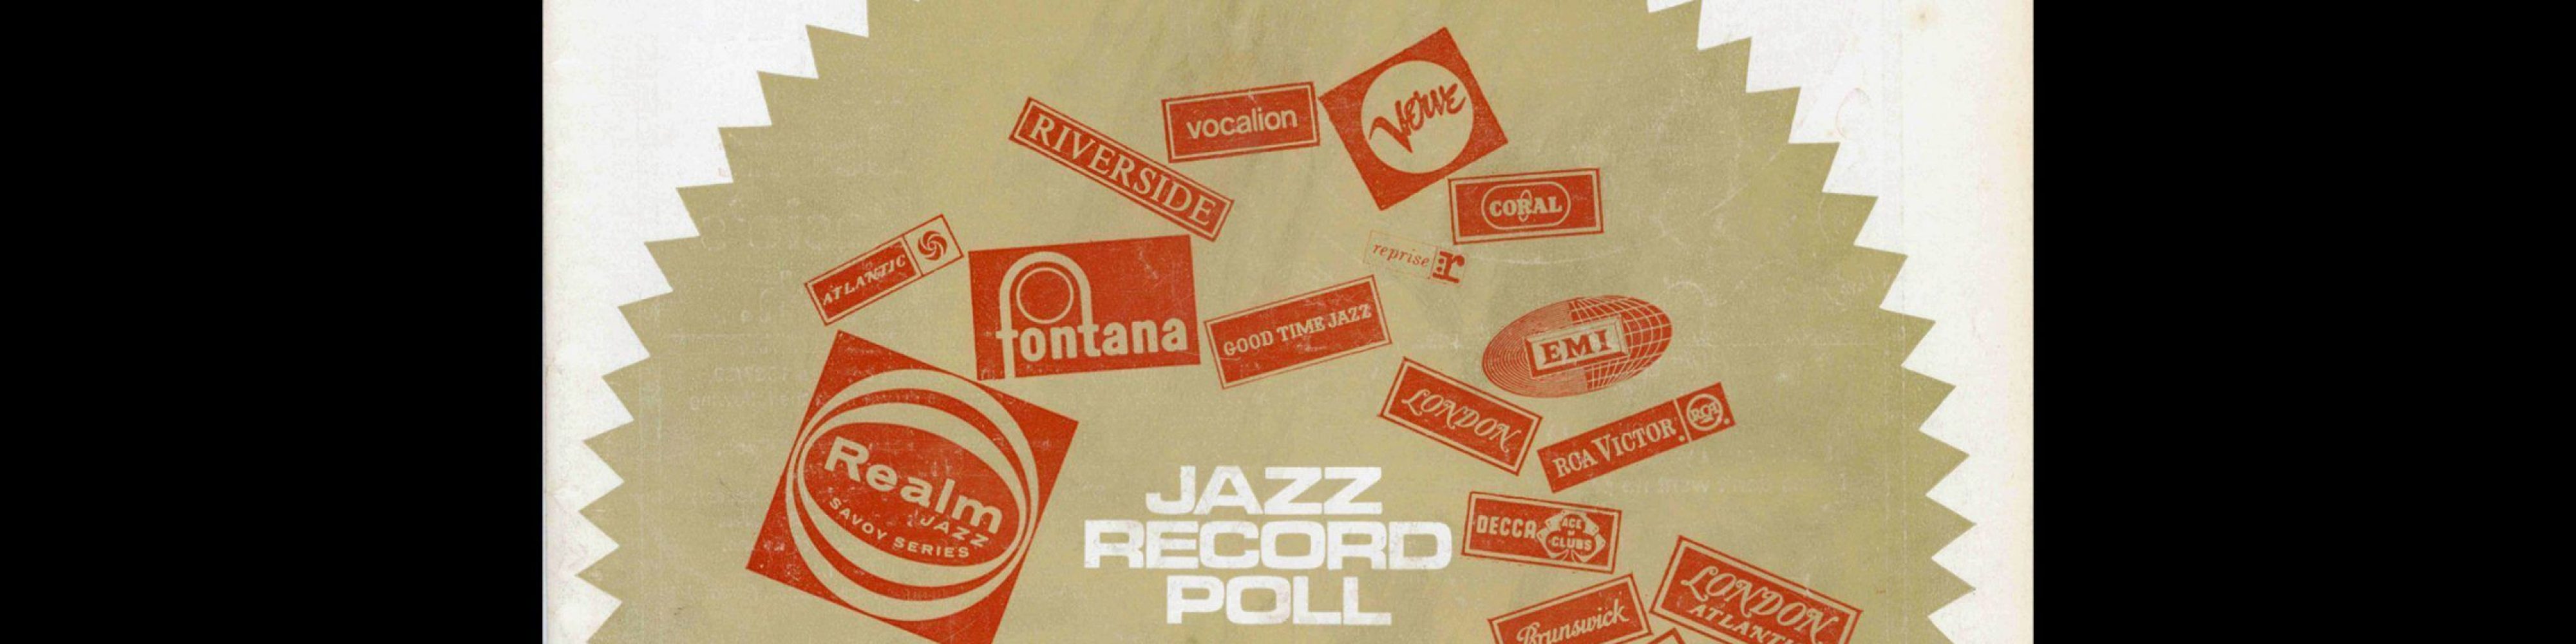 Jazz Journal, 12, 1966. Designed by Cal Swann